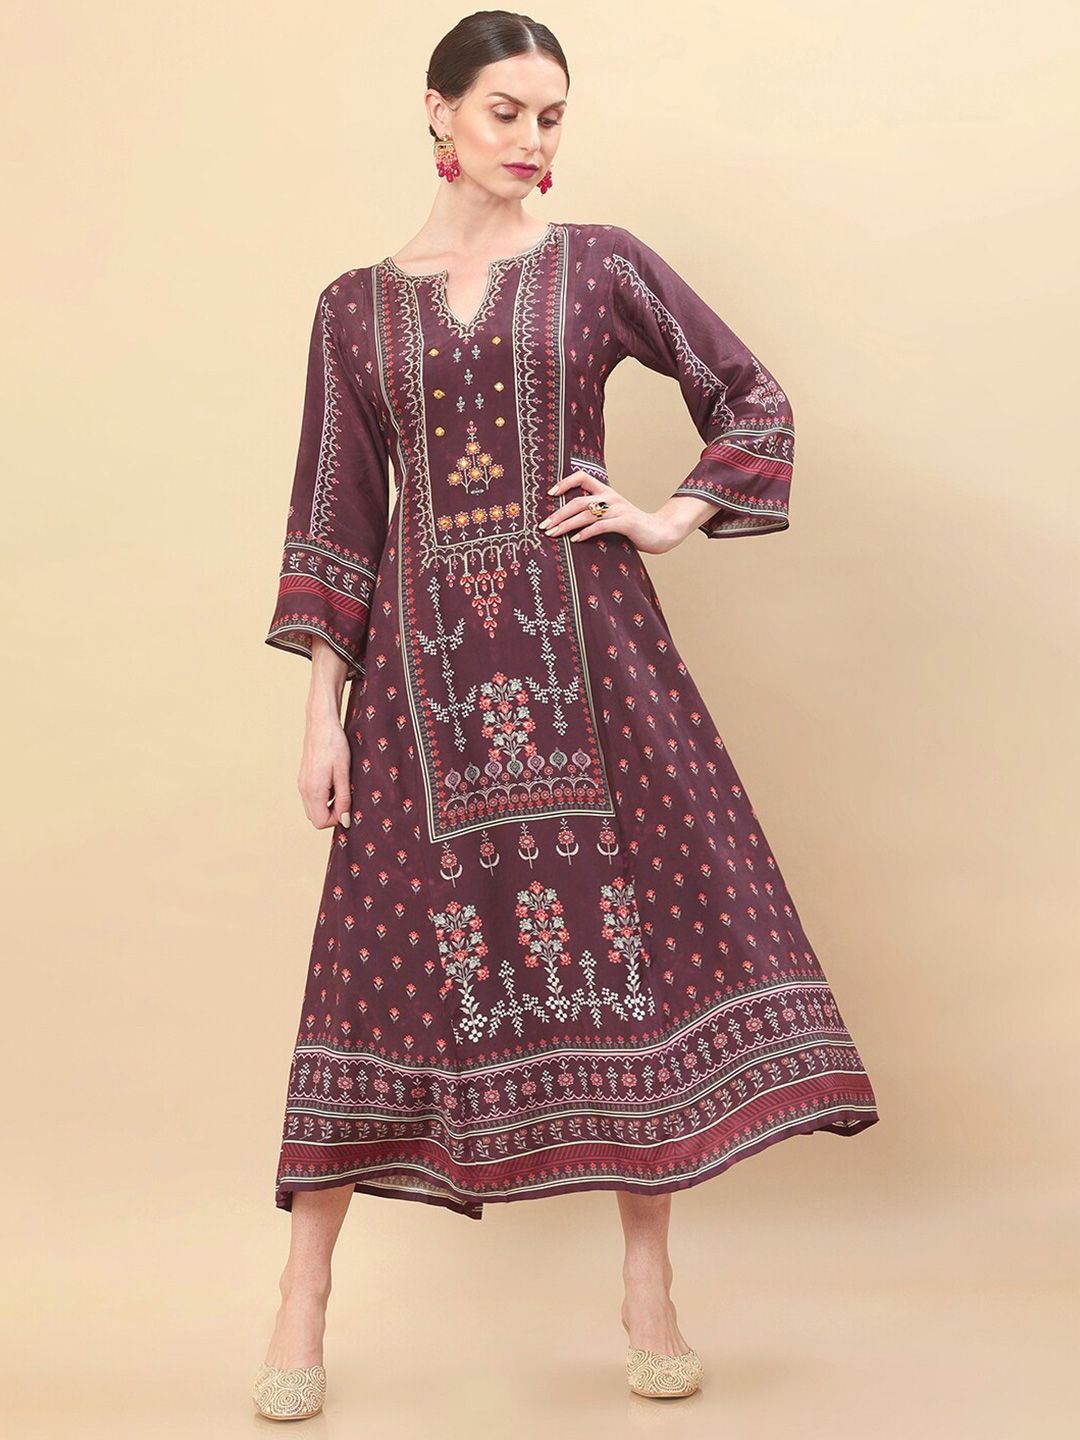 Soch Maroon Ethnic Motifs Crepe Ethnic A-Line Midi Dress Price in India